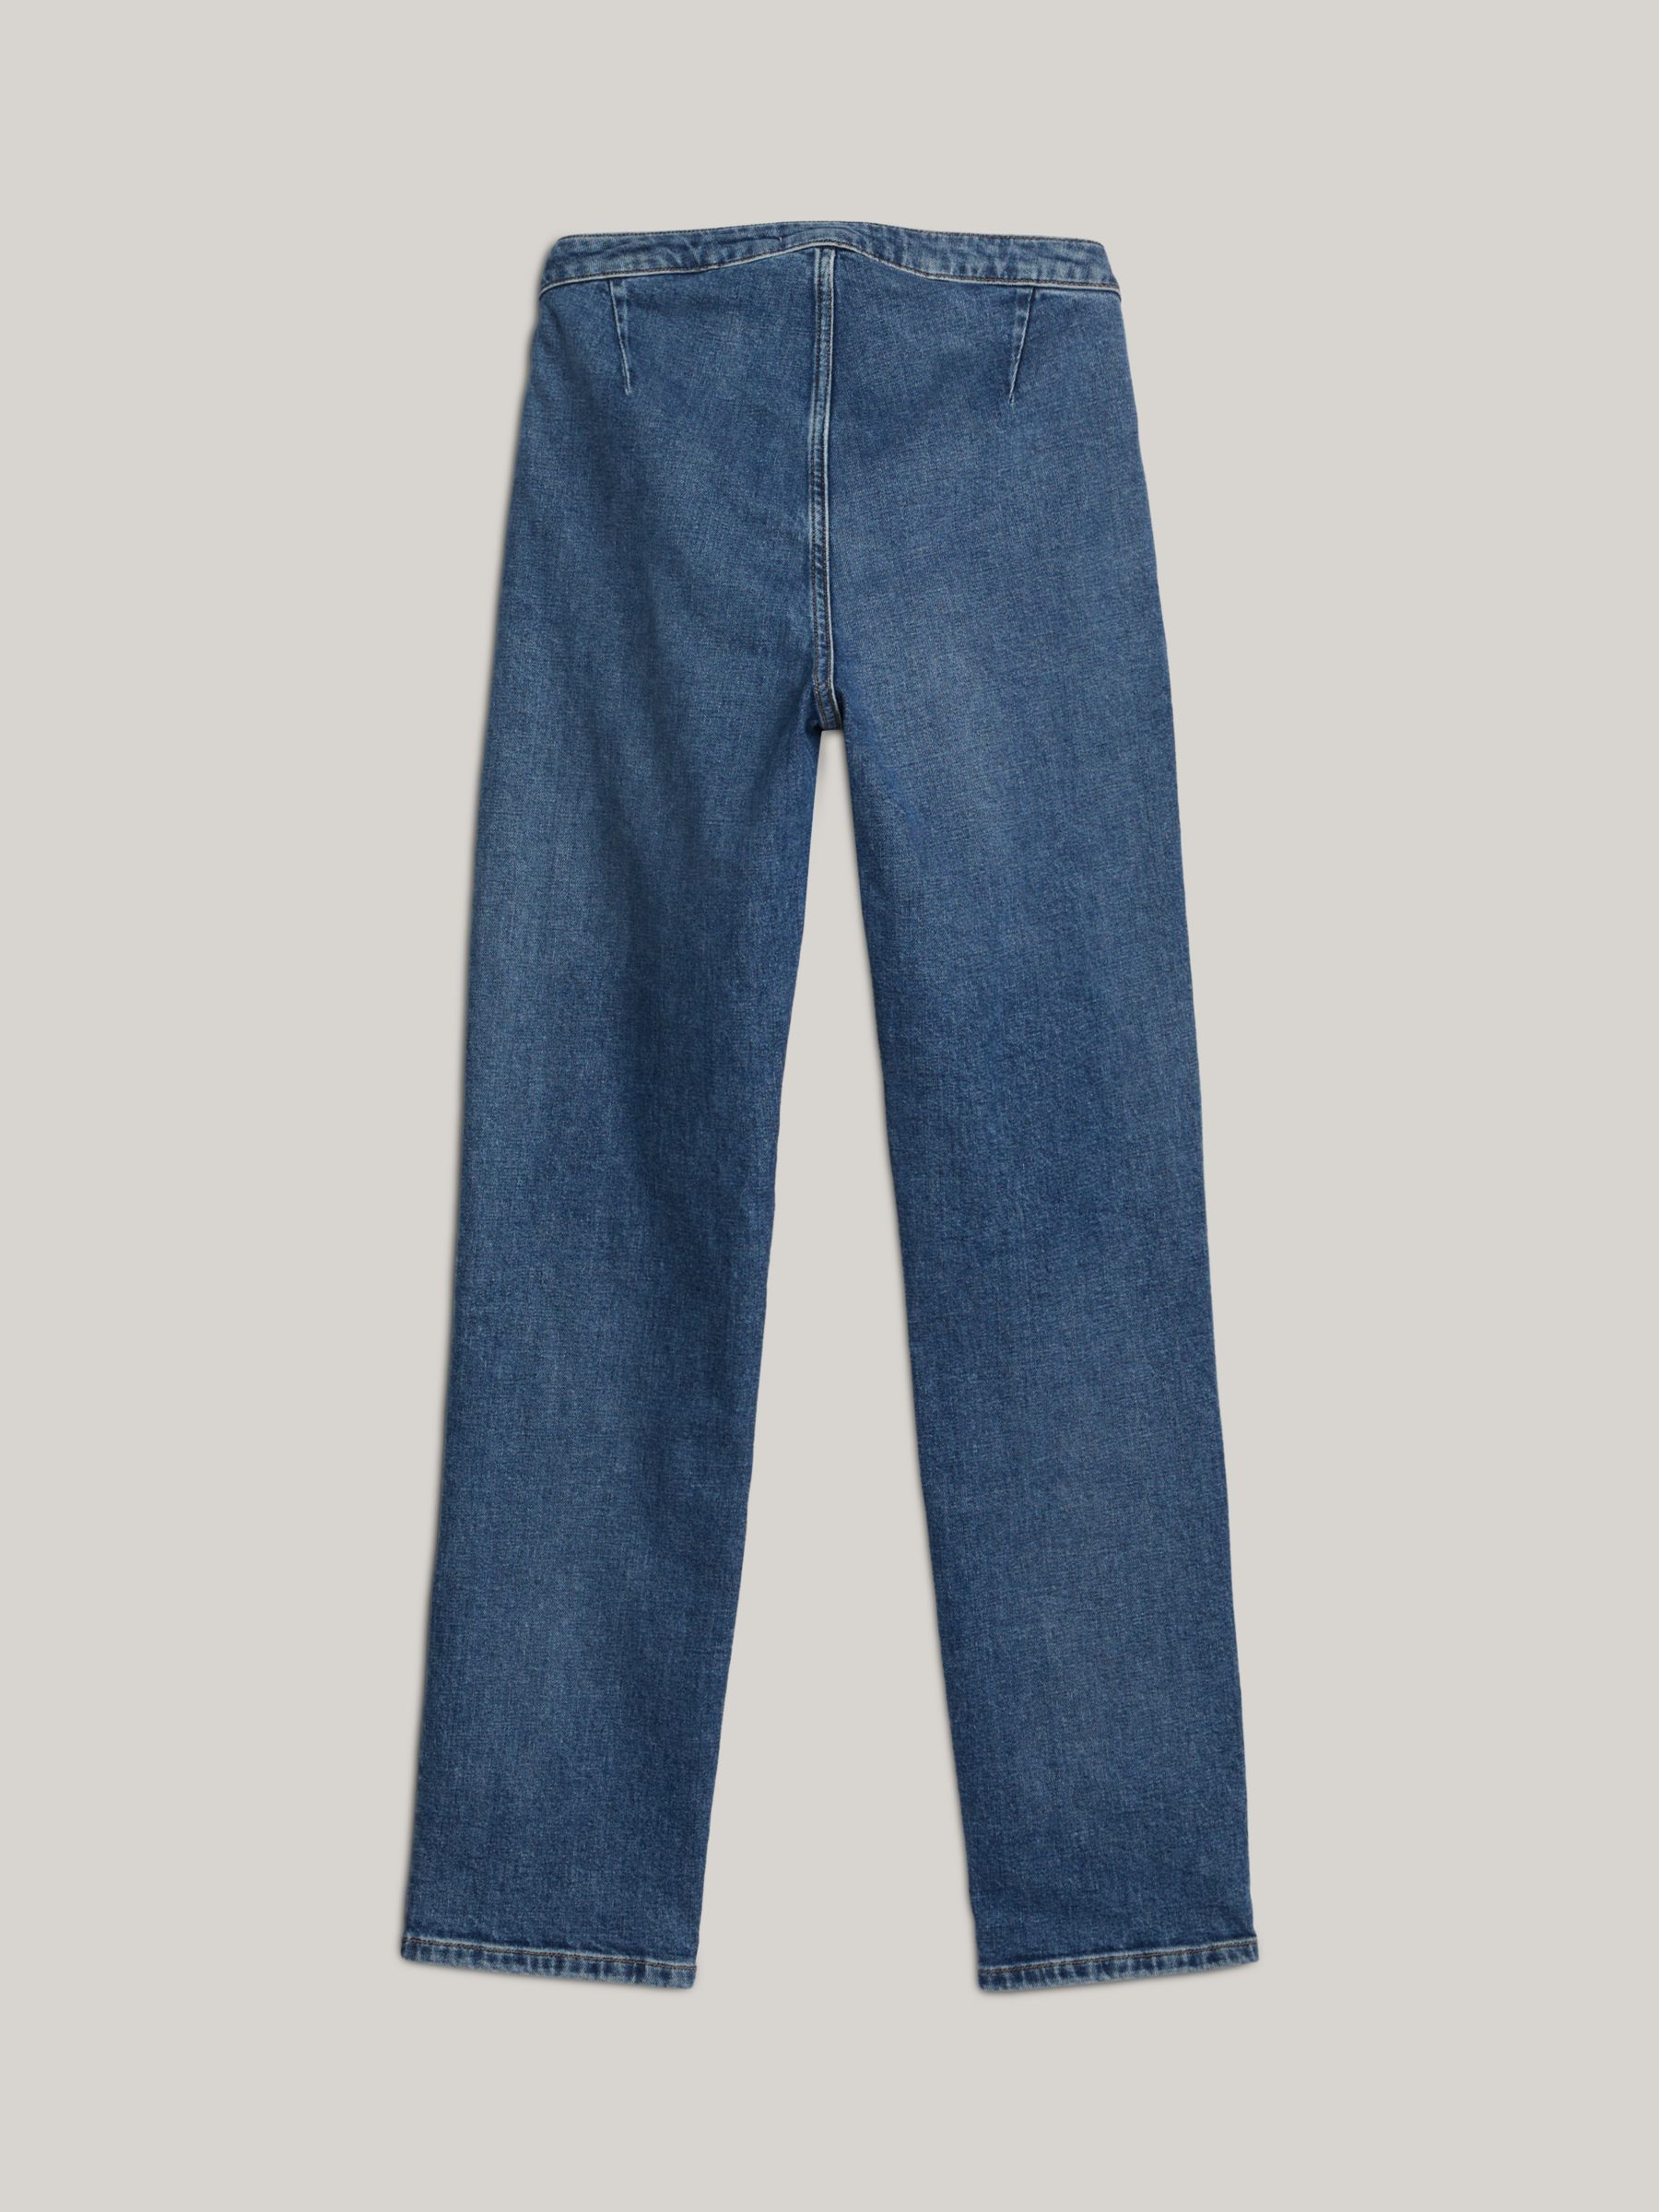 Tommy Hilfiger Adaptive Classic Straight Leg Jeans, Blue, 30R